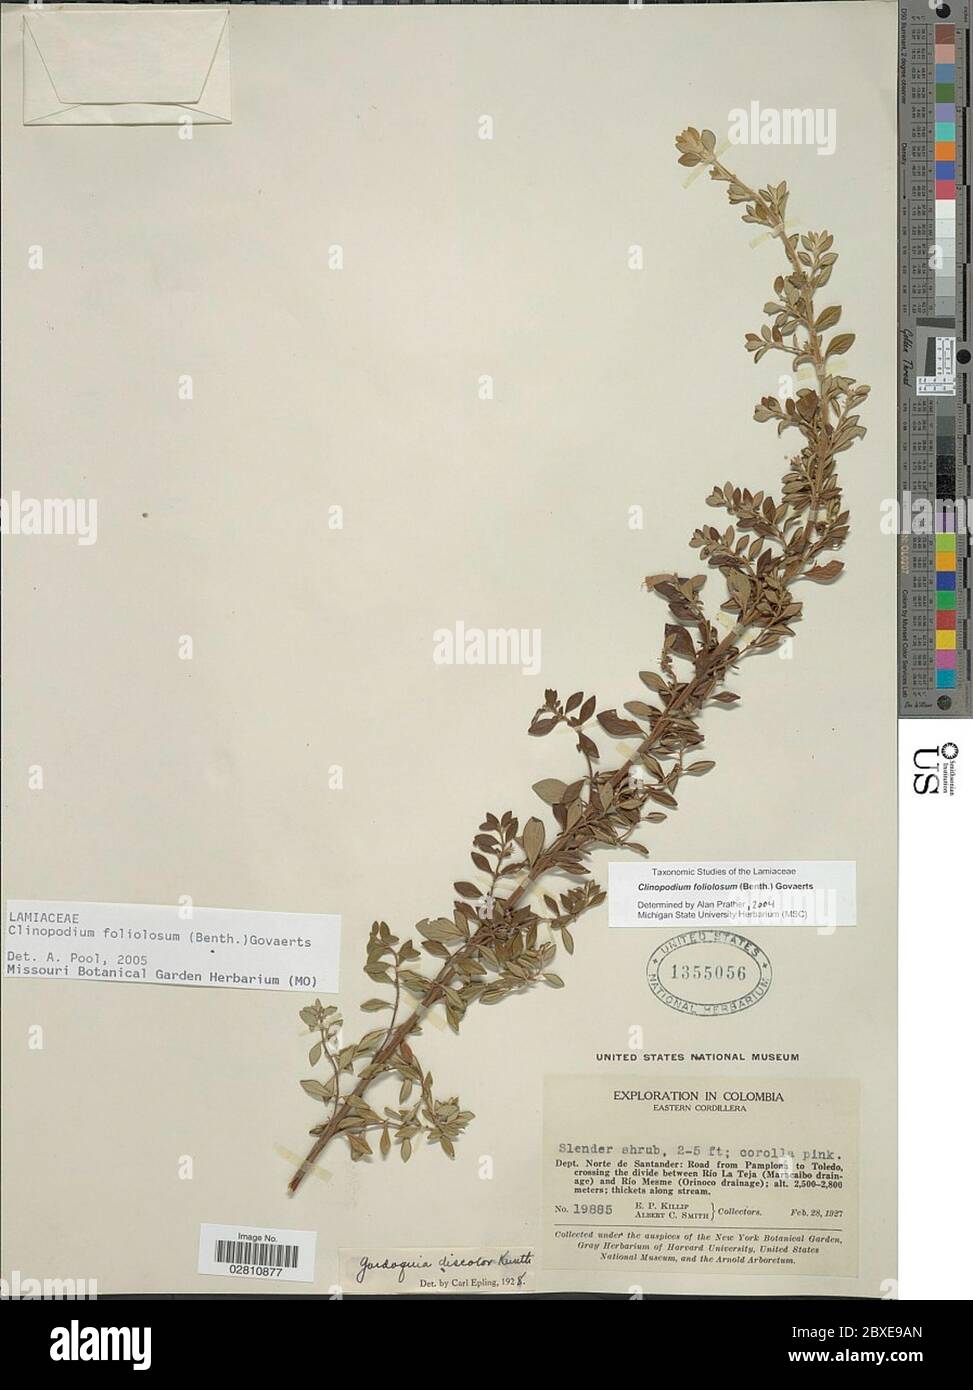 Clinopodium foliolosum Benth Govaerts Clinopodium foliolosum Benth Govaerts. Stock Photo